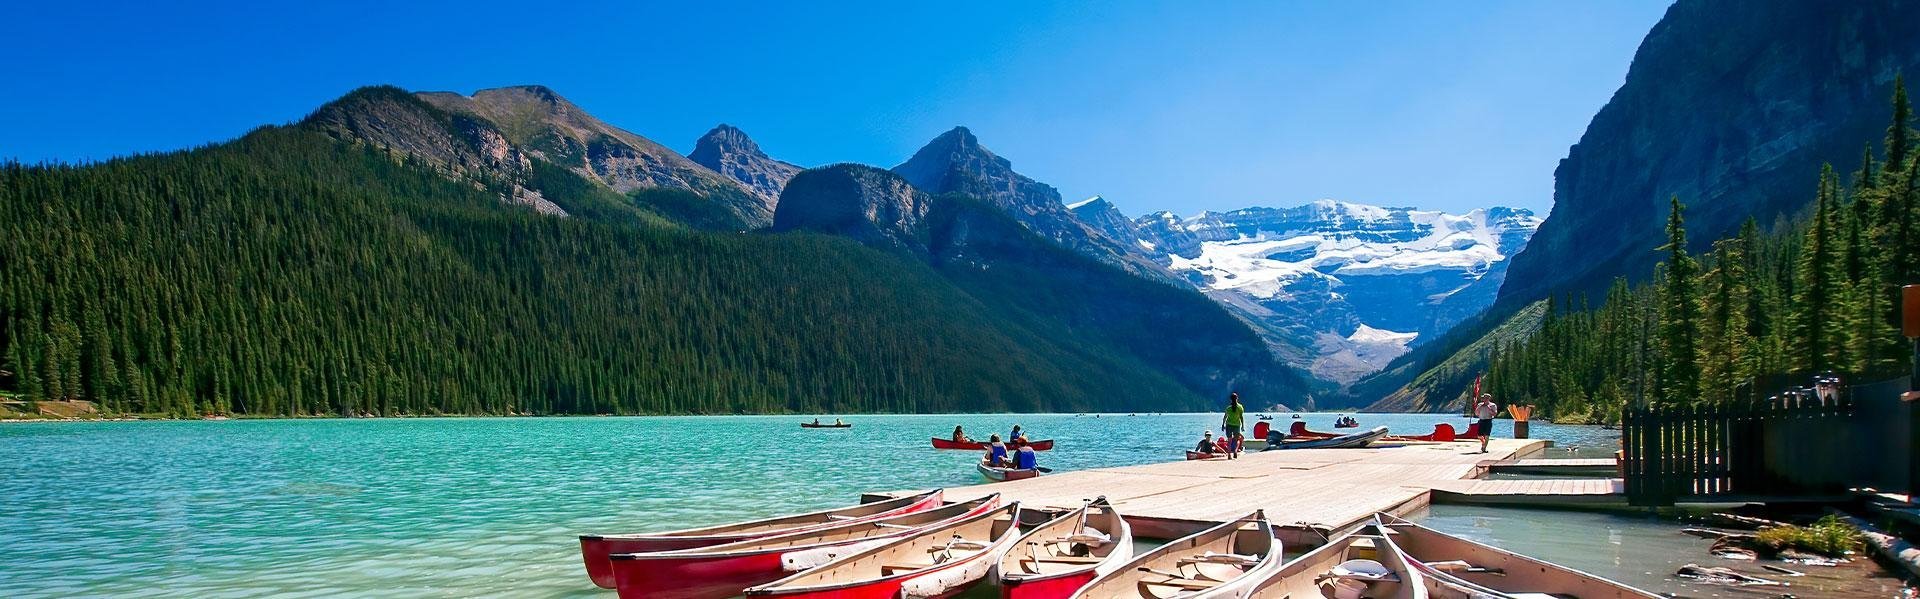 Lake Louise Banff NP Canada